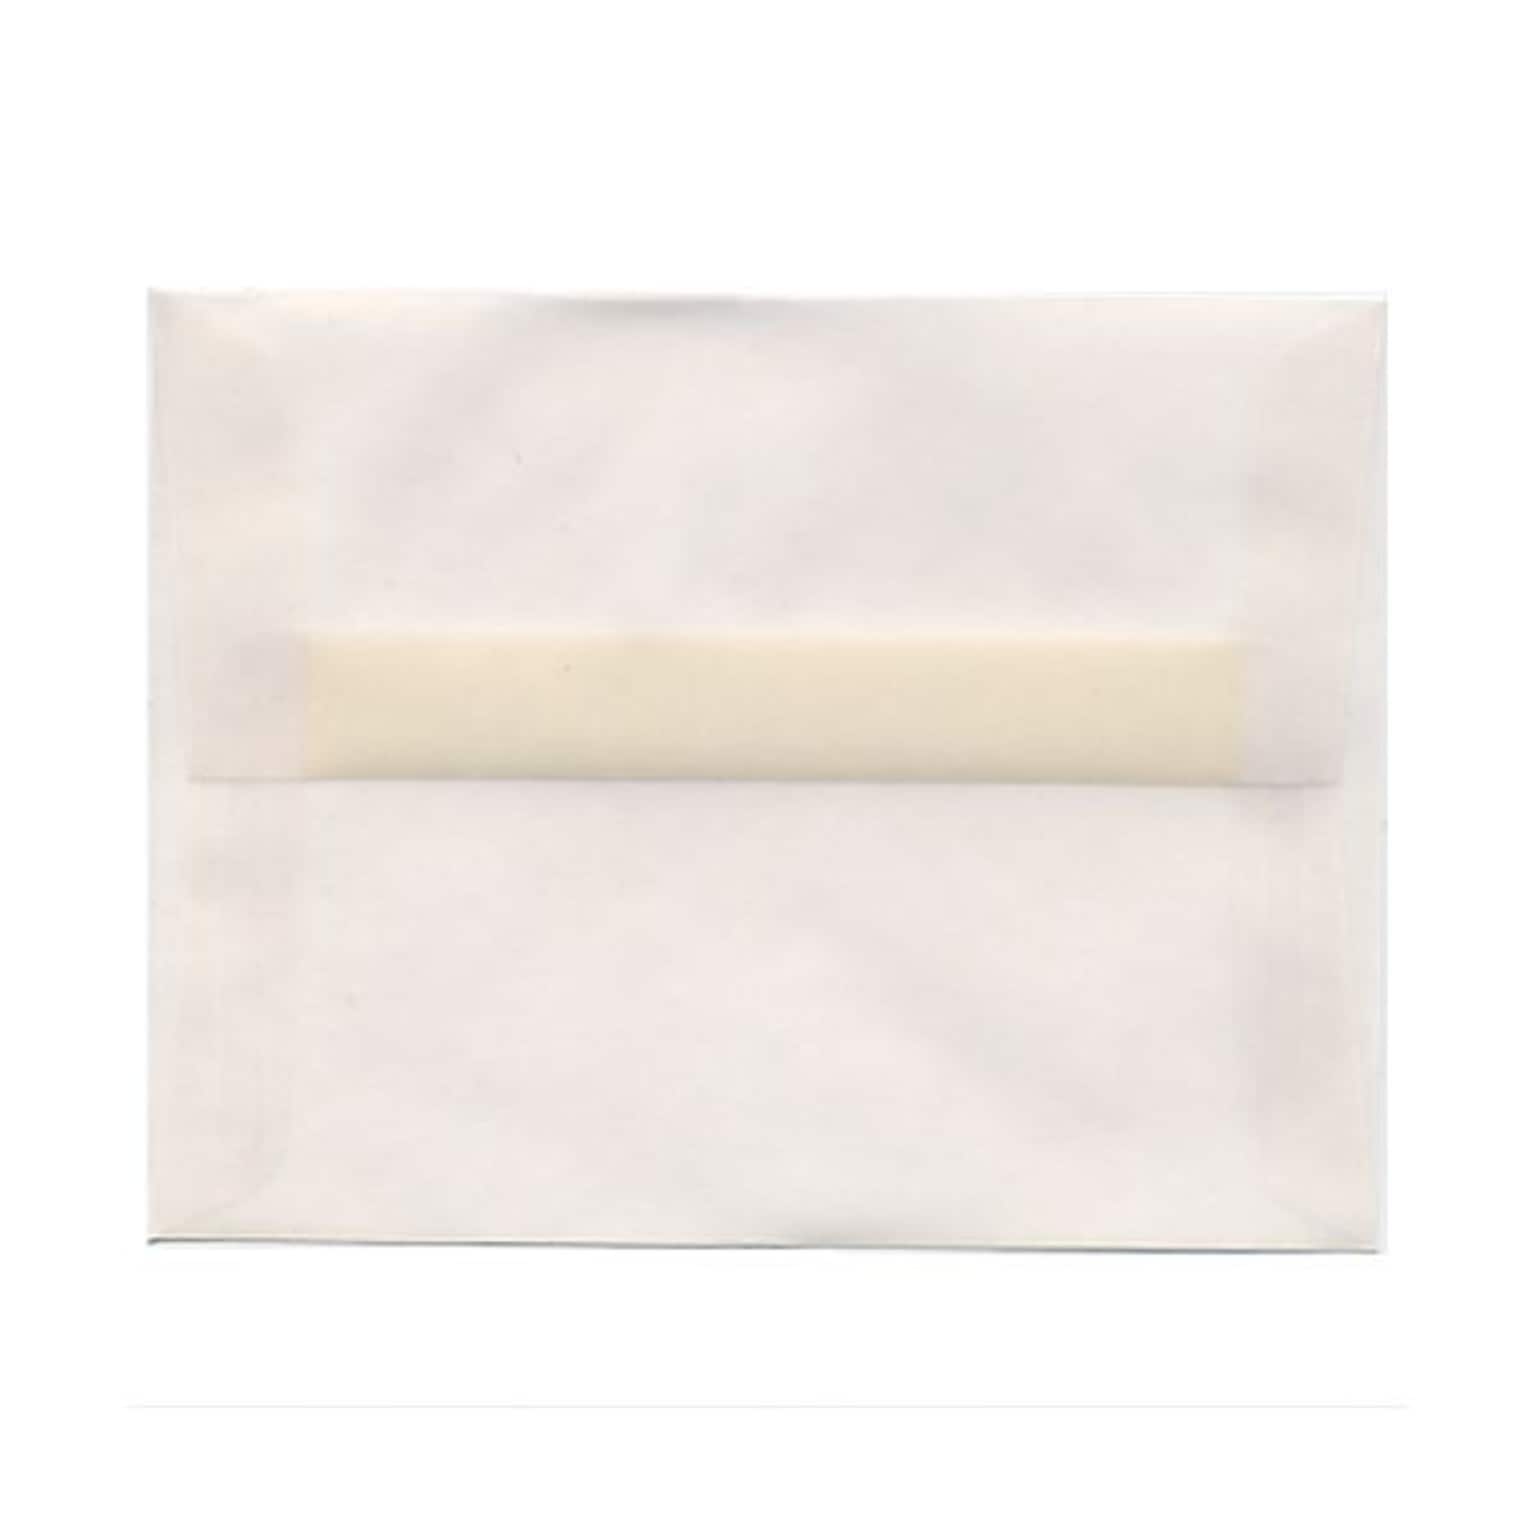 JAM Paper A2 Translucent Vellum Invitation Envelopes, 4.375 x 5.75, Clear, 25/Pack (53794)